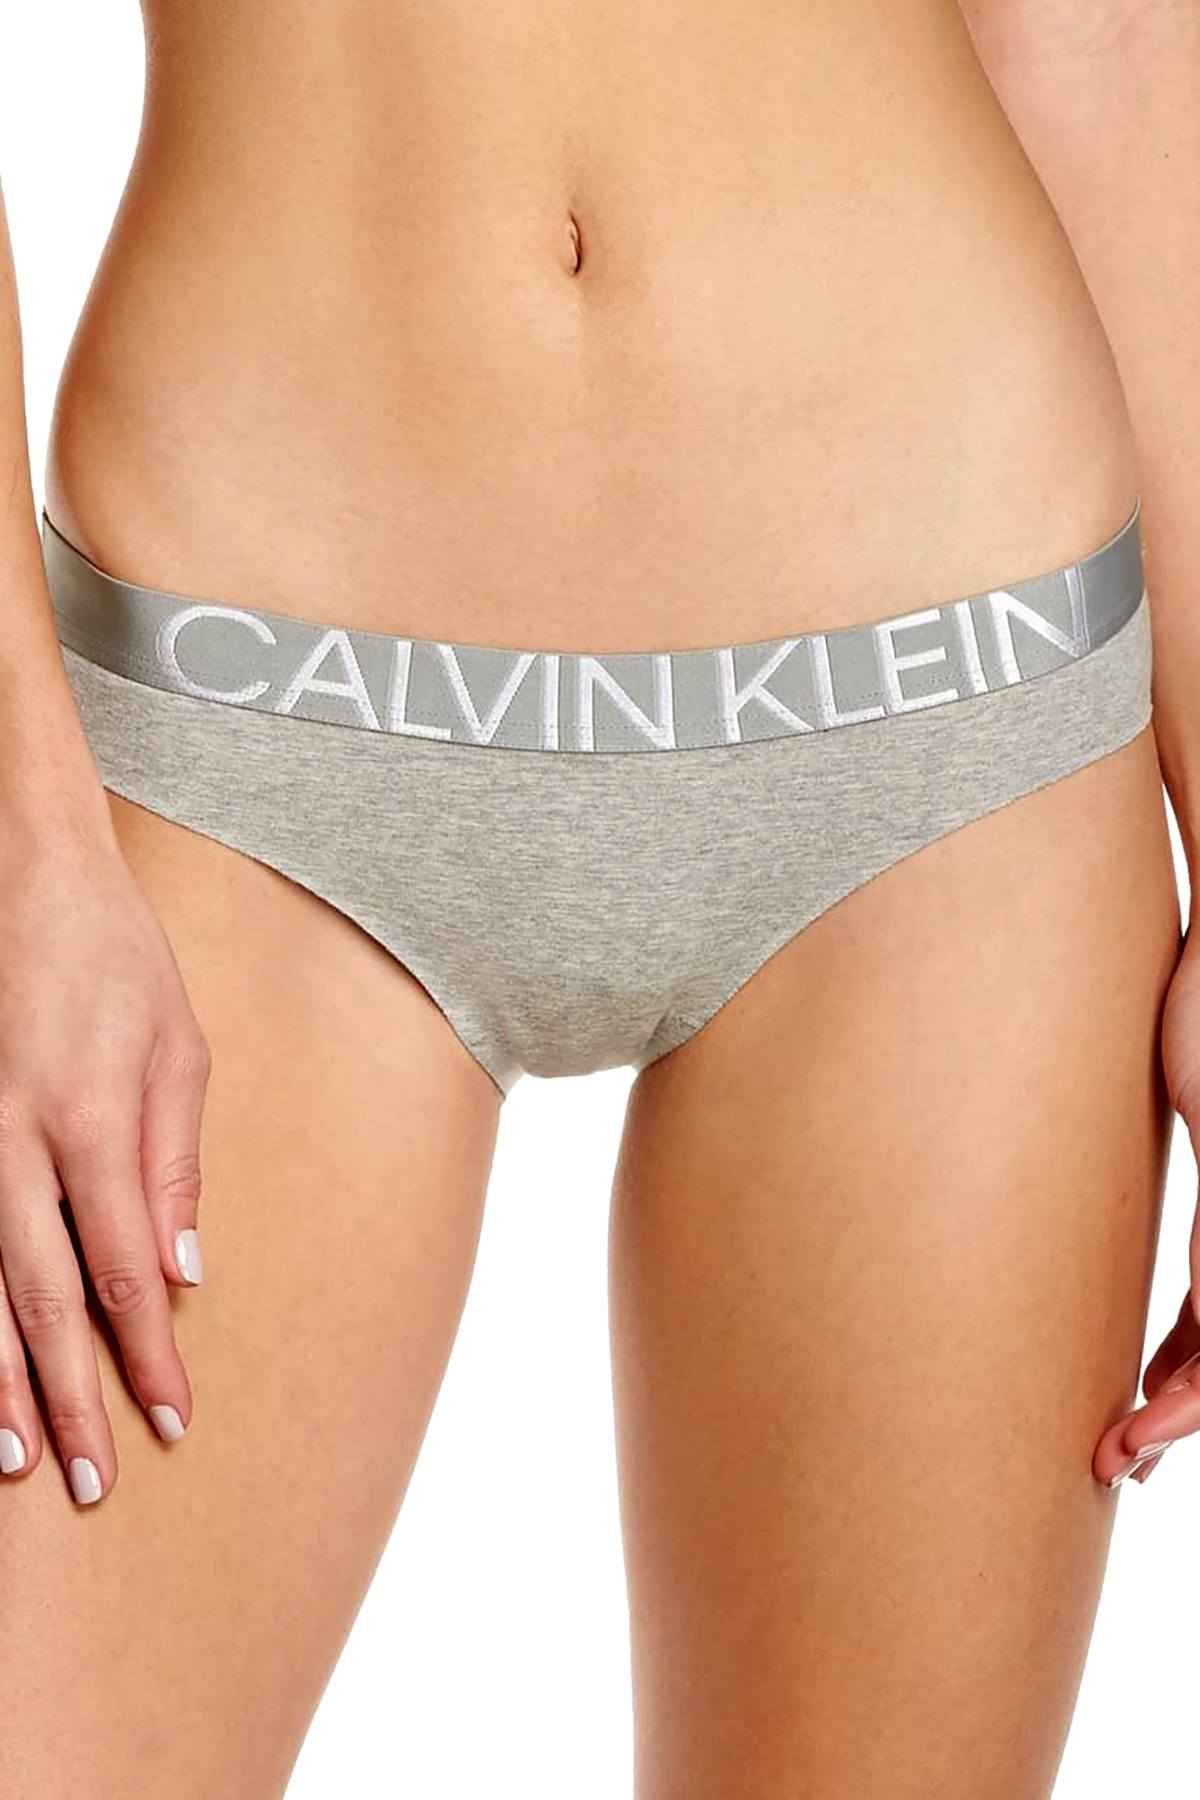 Calvin Klein Women's Plus Size Statement 1981 Thong Panty, Grey Heather, 1X